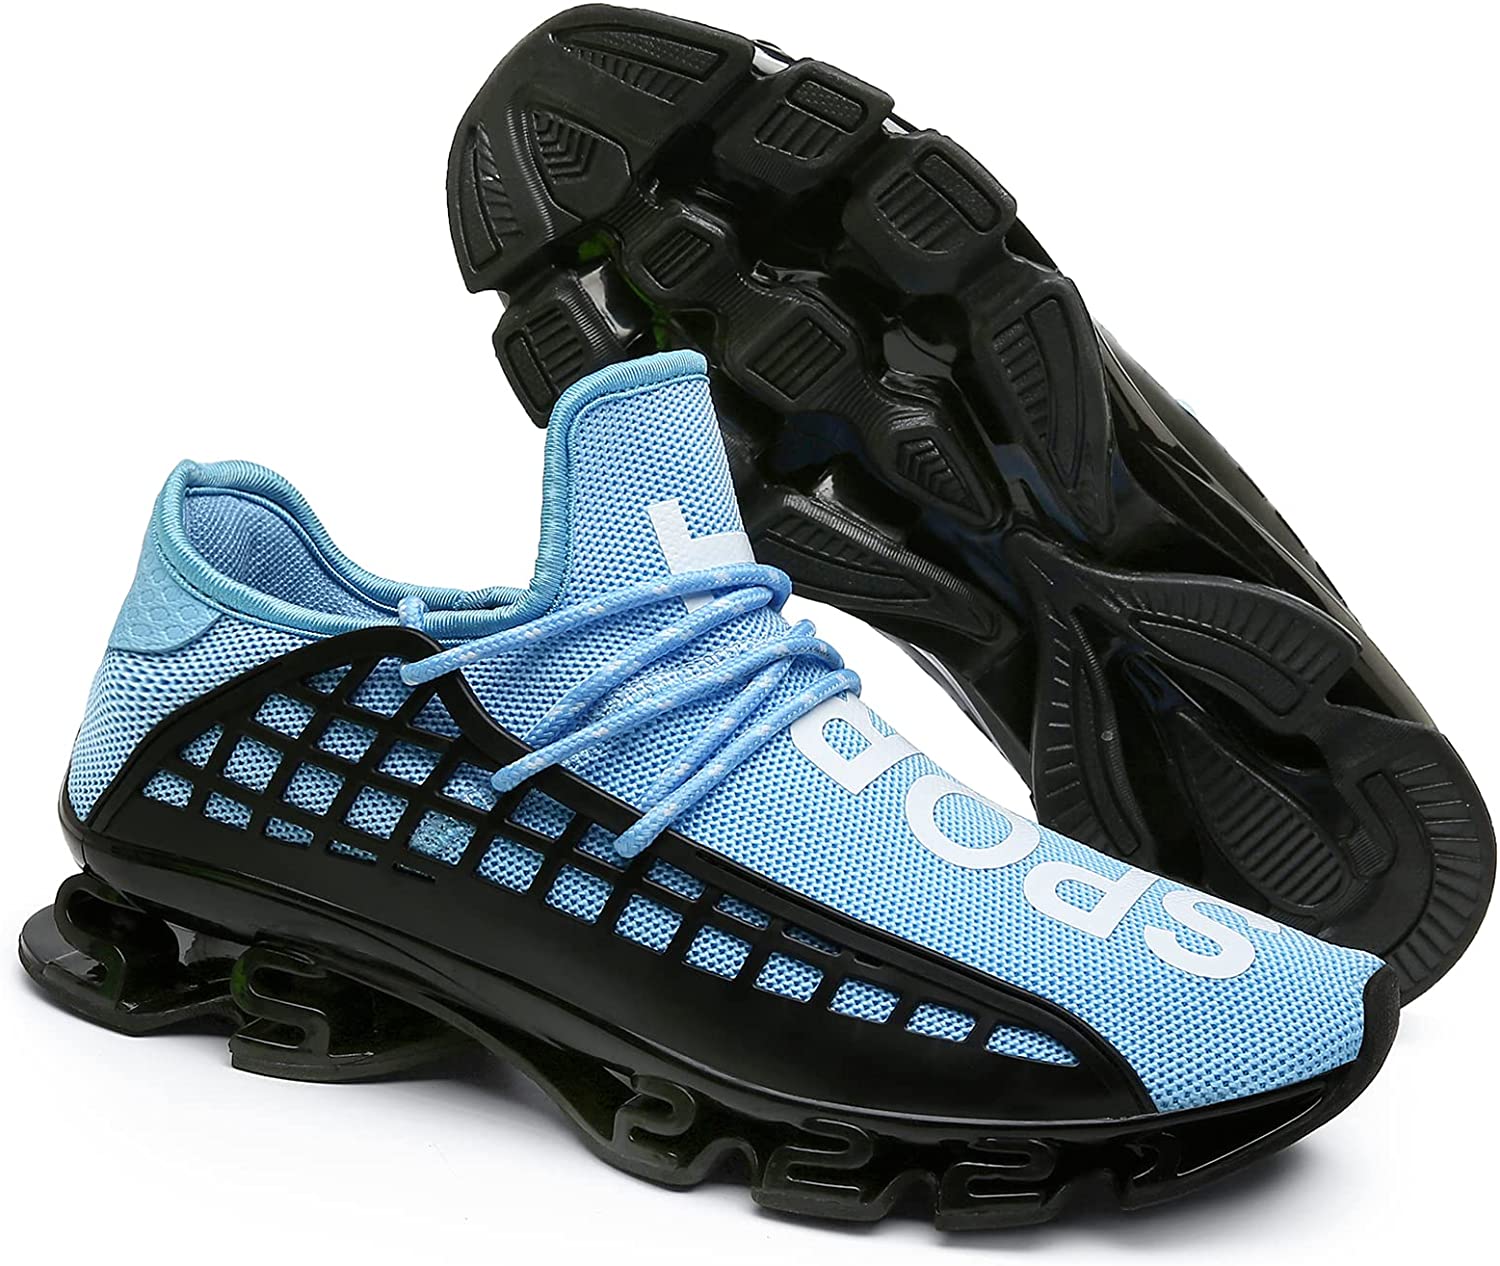 DUORO Tennis Shoes Men Lightweight Walking Shoes for Men Non Slip Breathable Athletic Gym Women Men Shoes Sneakers 